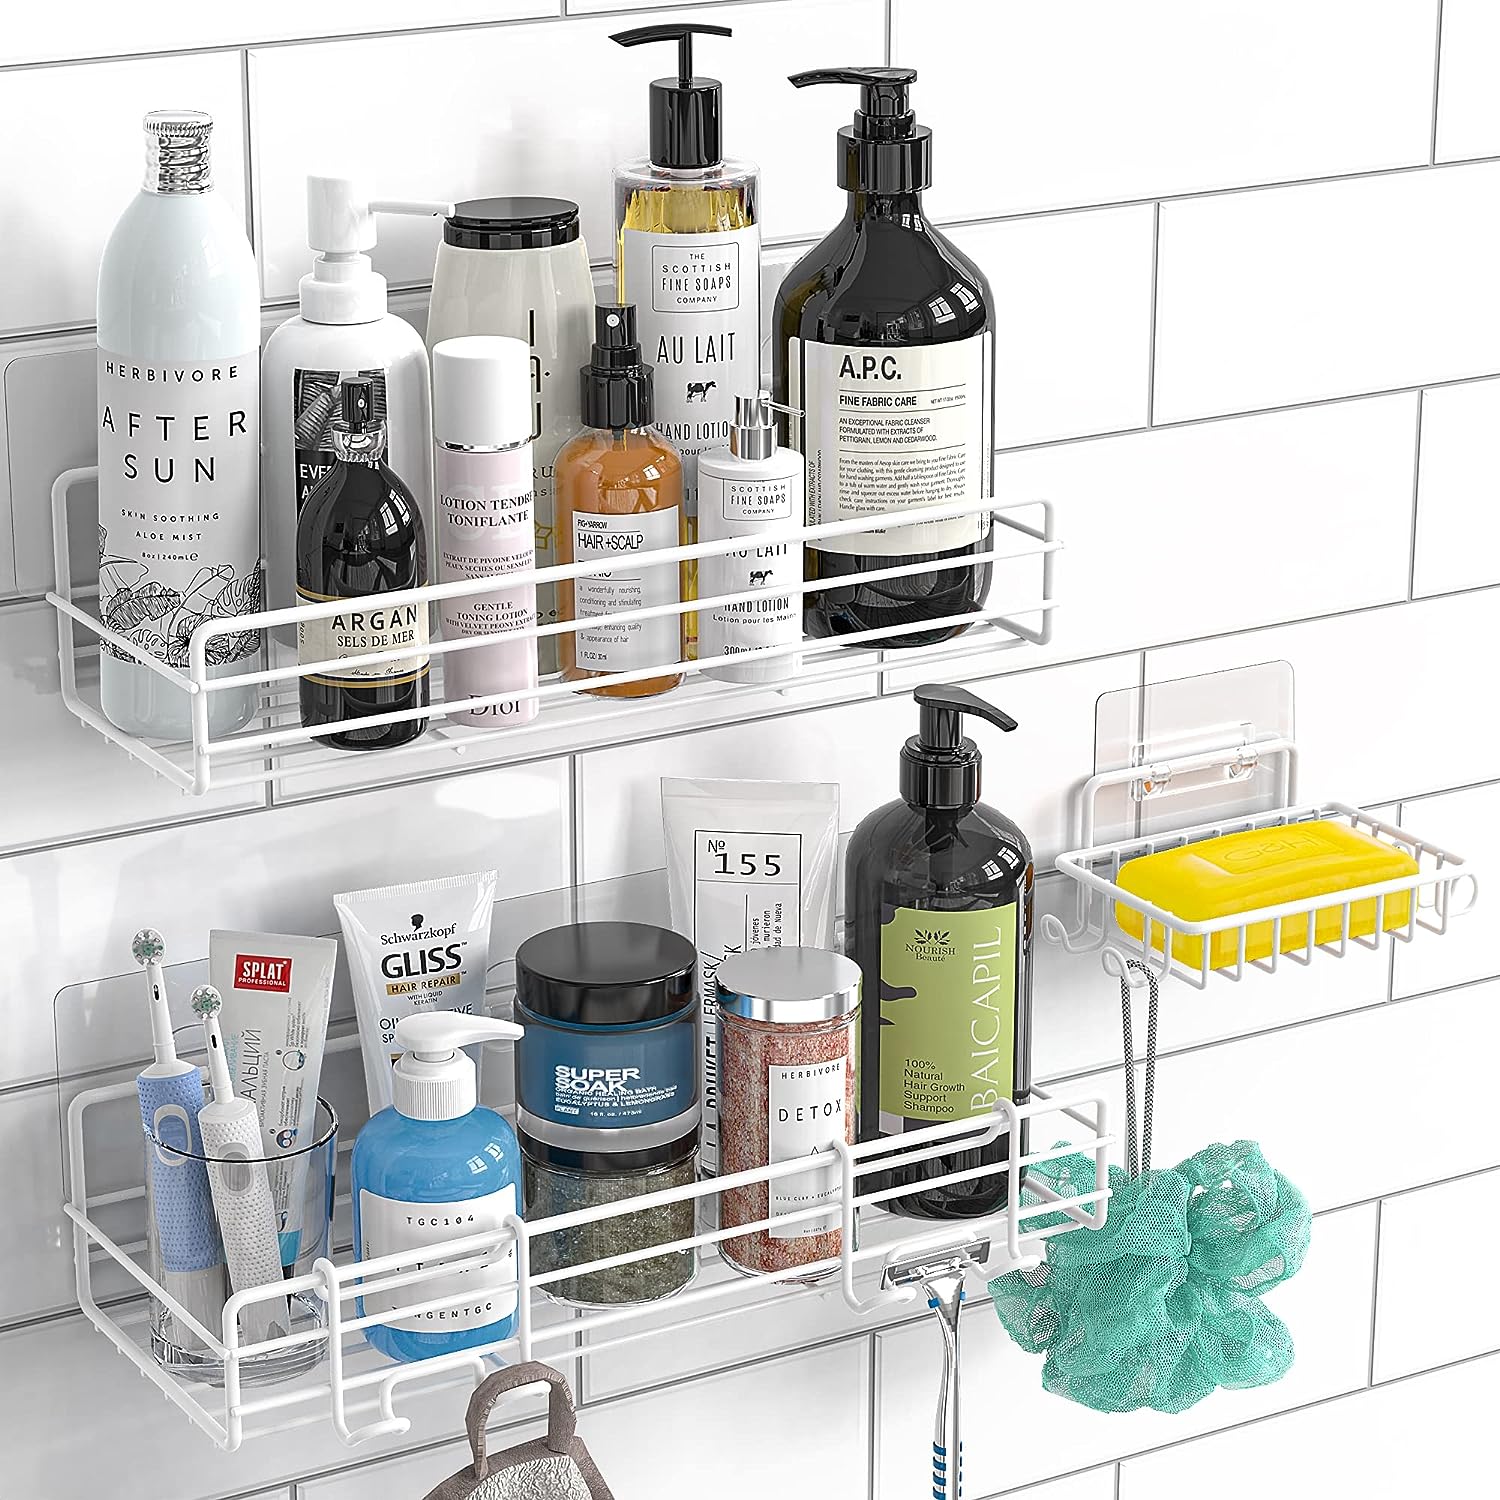 Blushbees Shower Caddy Basket Shelf with Soap Holder, No Drilling Adhesive Shower Wall Shelves, Rustproof Bathroom Shower Storage Organizer